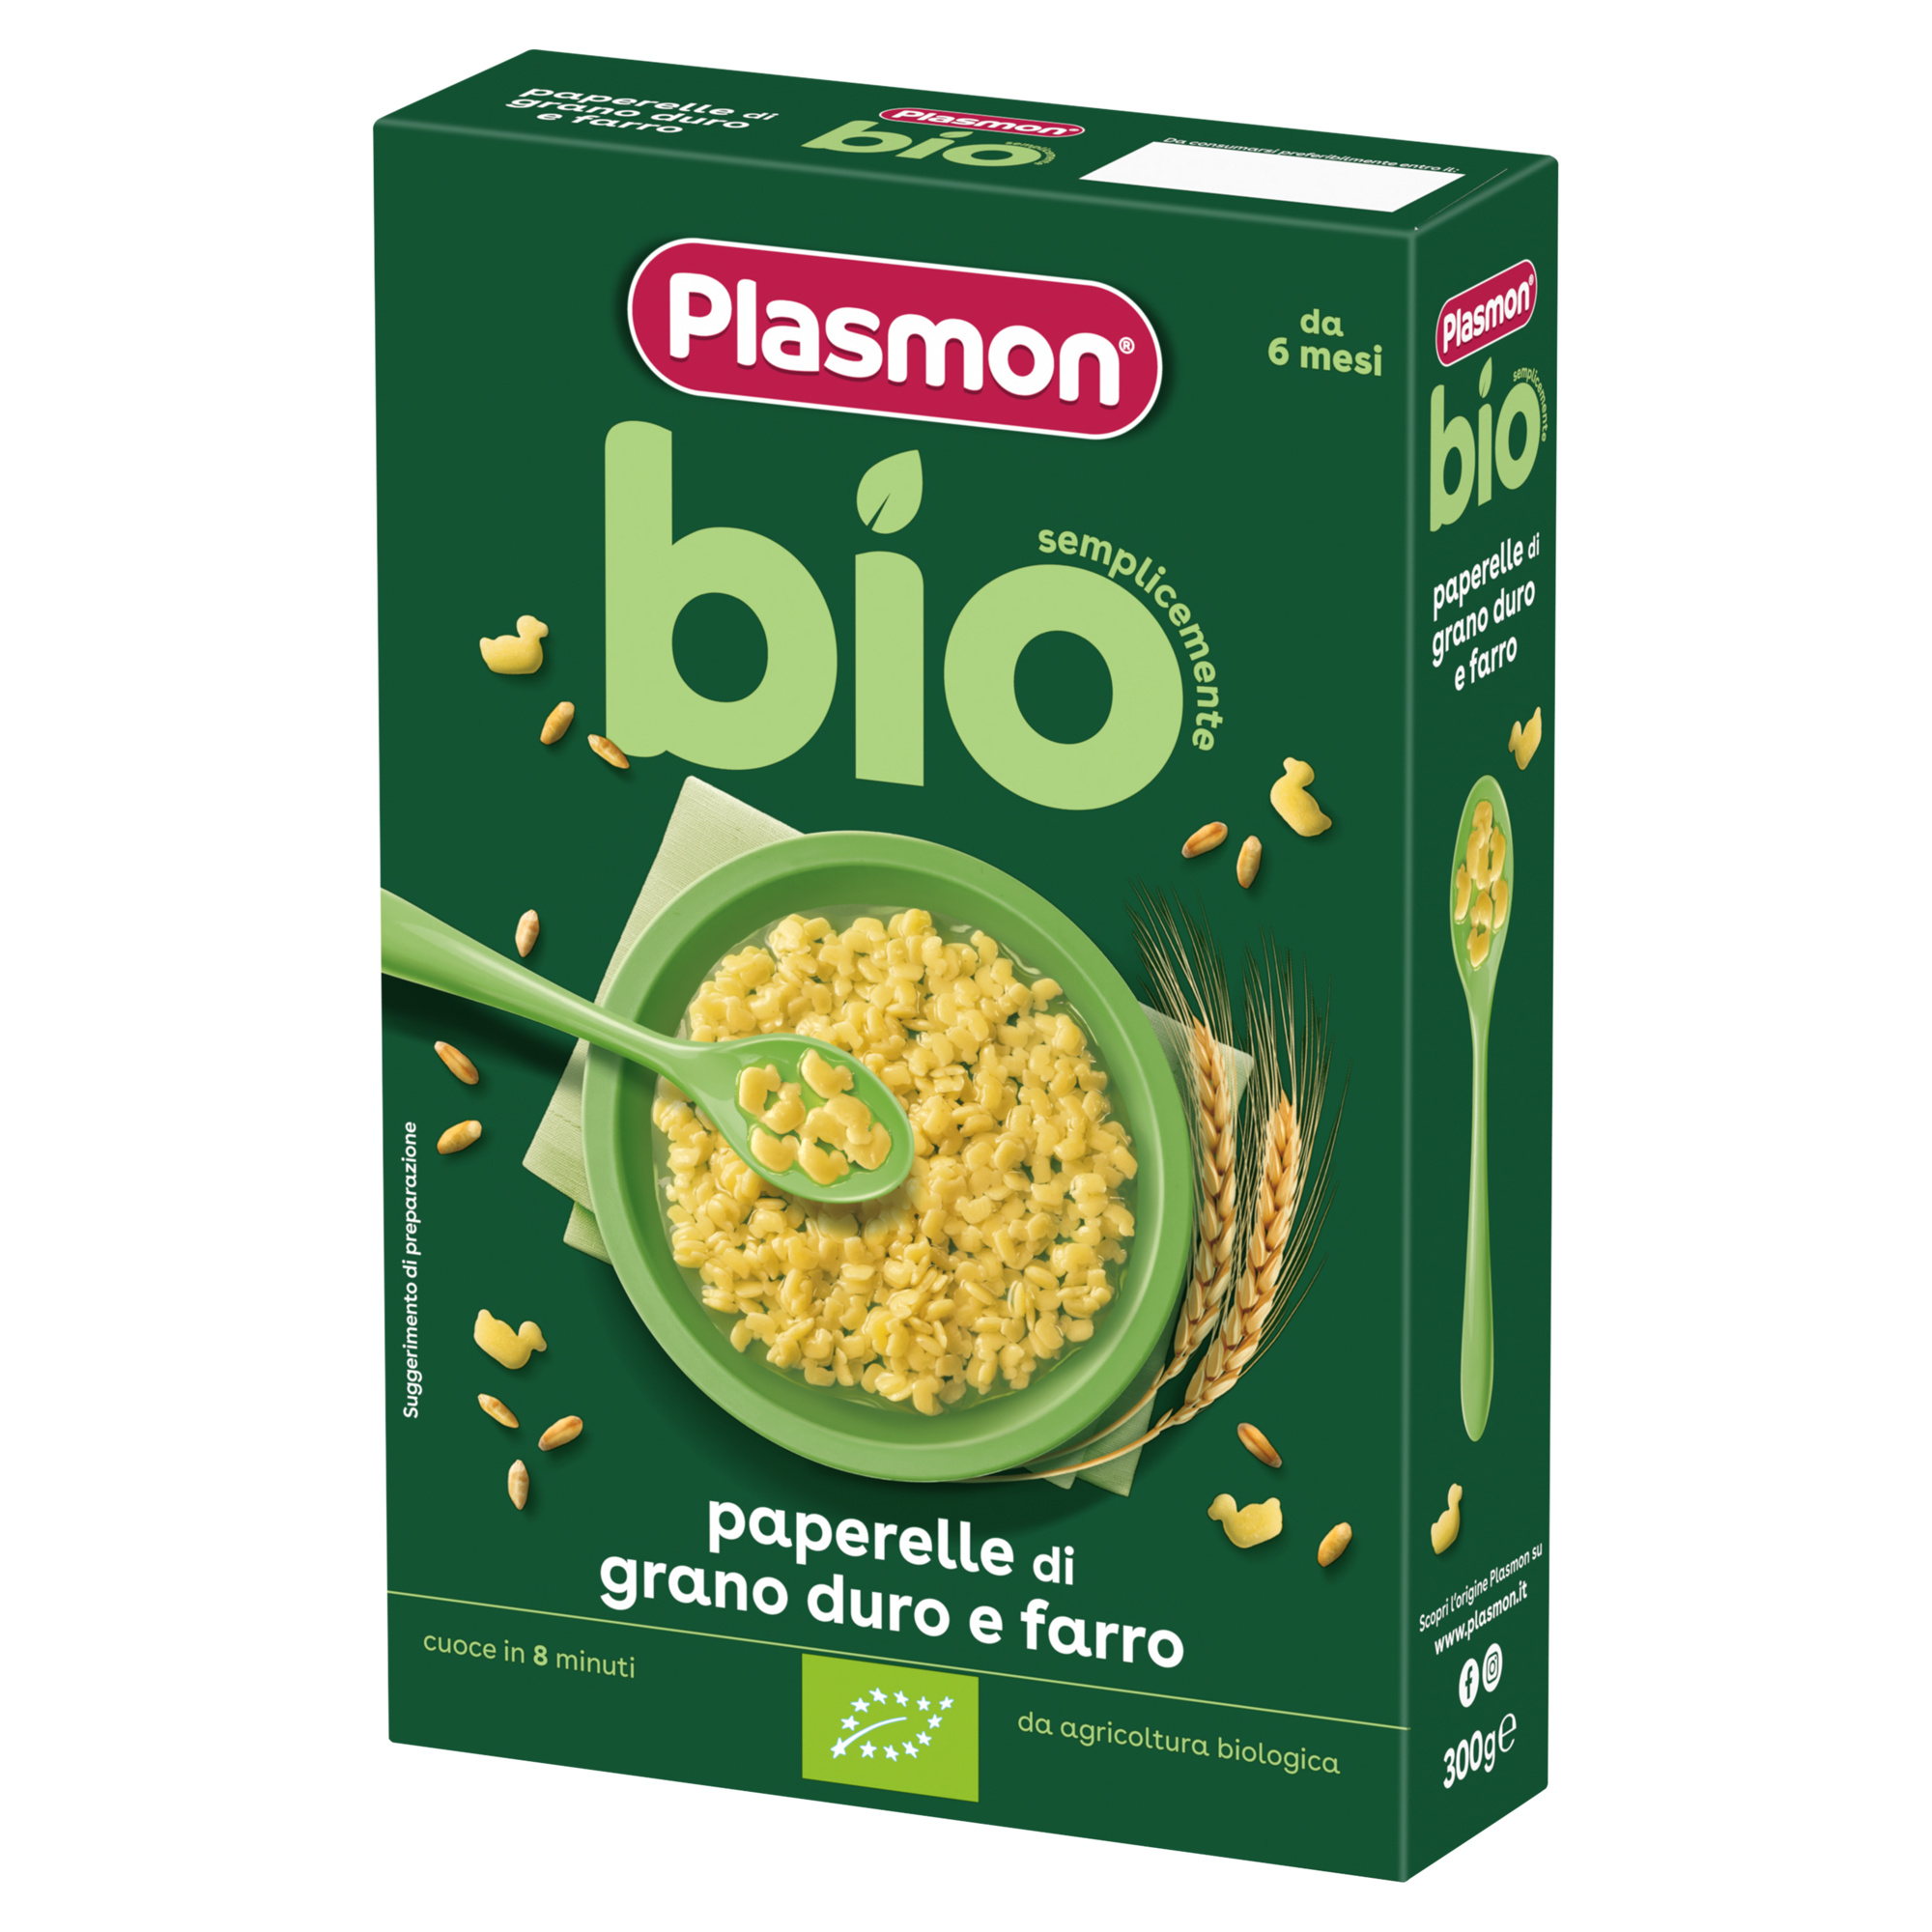 Plasmon 6+ pastina bio paperelle 300gr - PLASMON